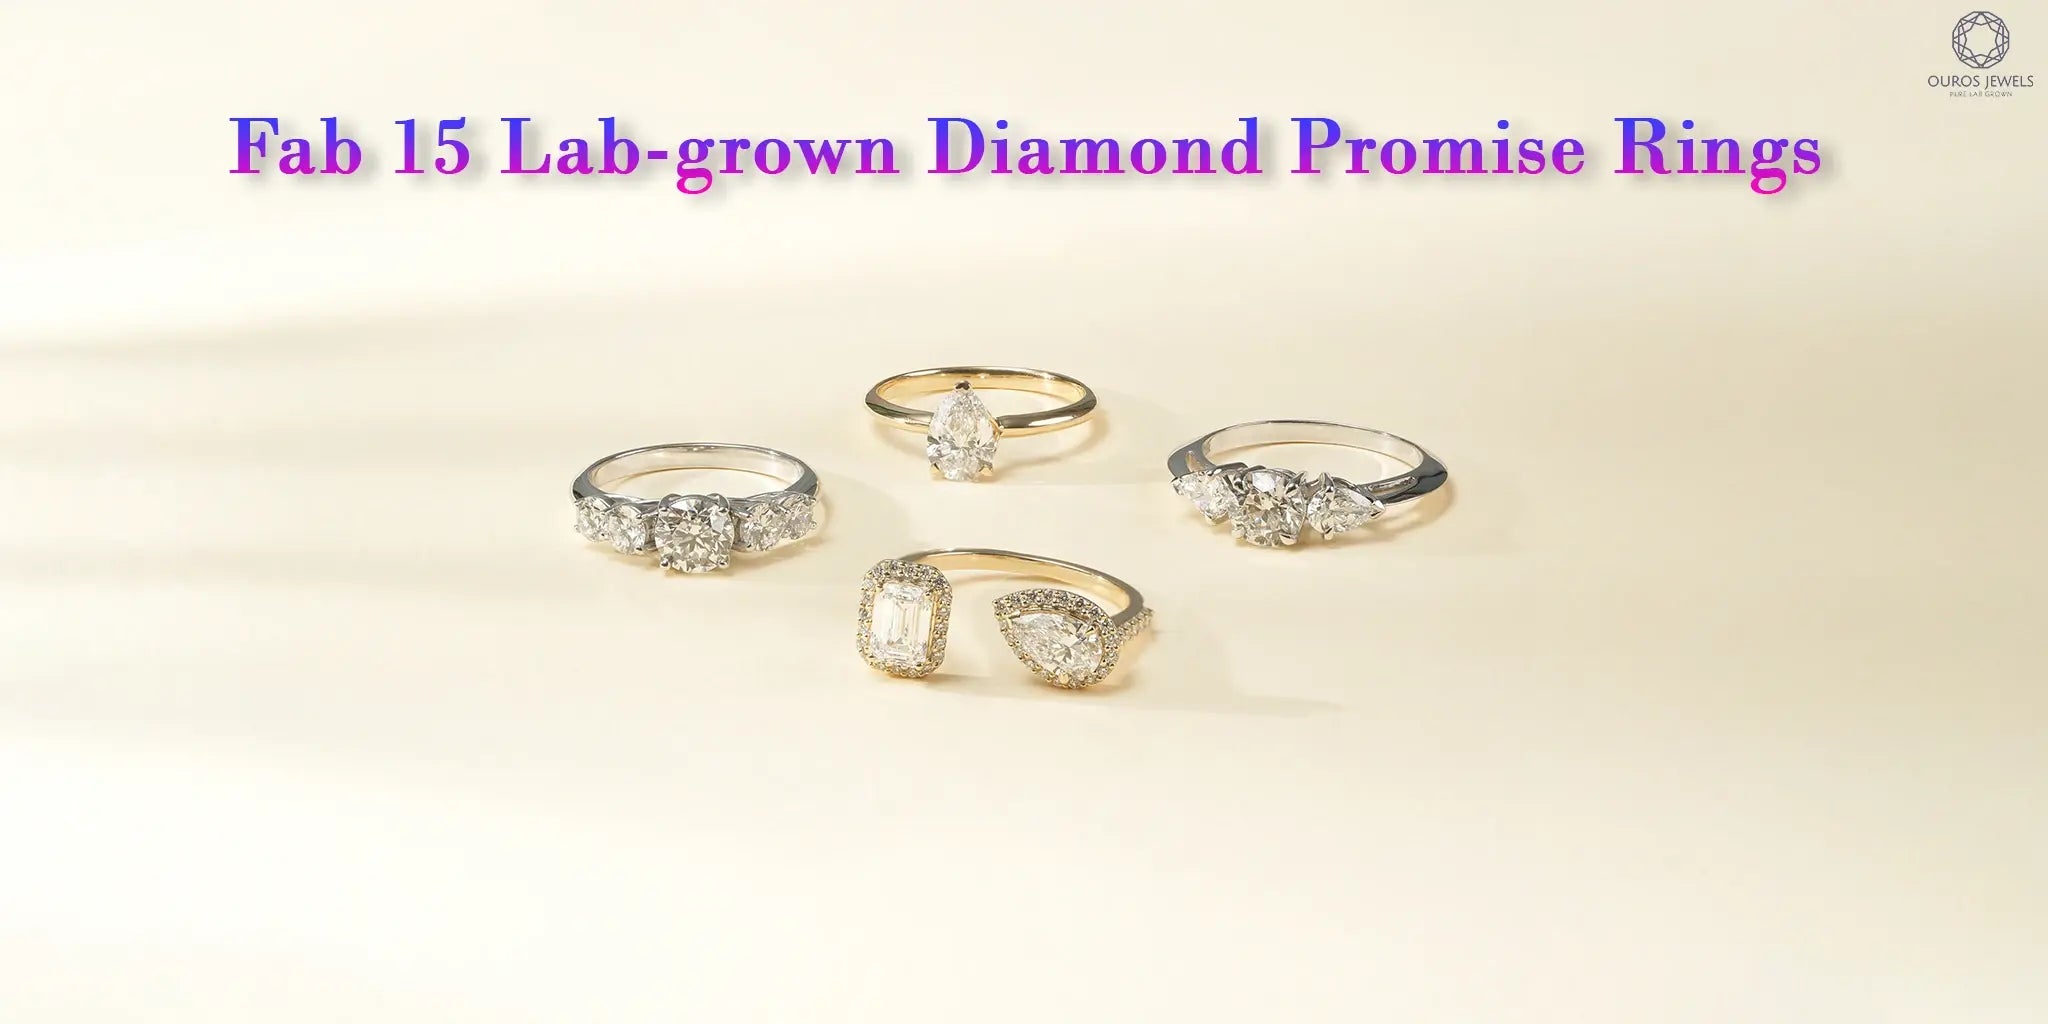 Are canary diamonds ok for engagement rings? -Yellow Diamond Engagemen –  Kingofjewelry.com